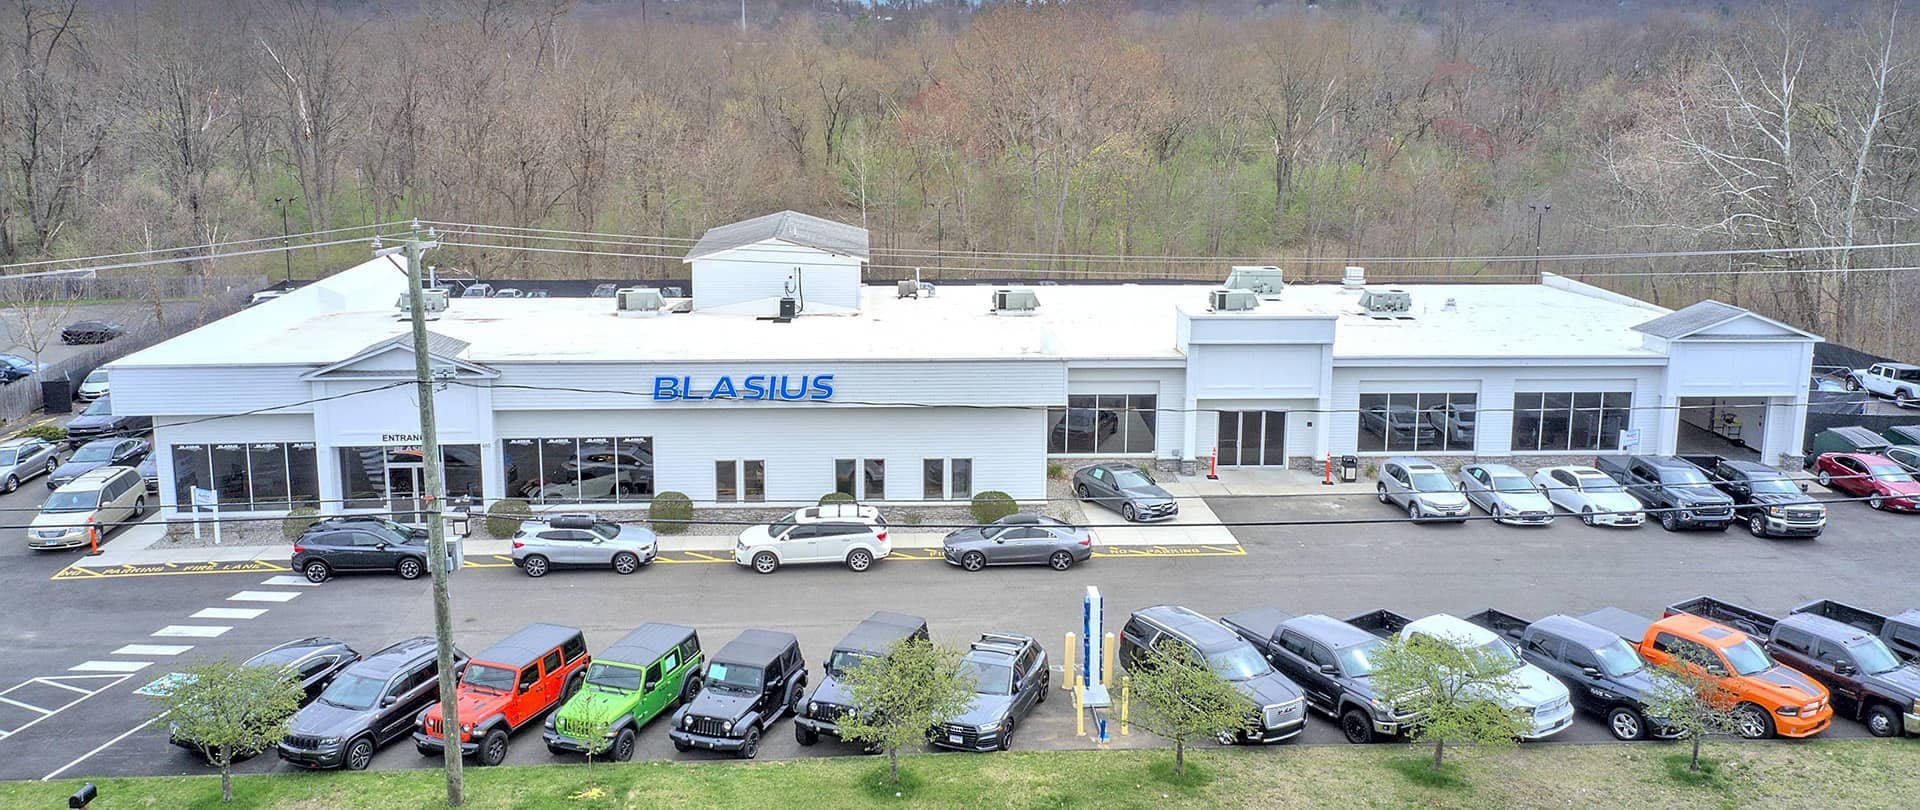 Blasius Federal Road dealership front